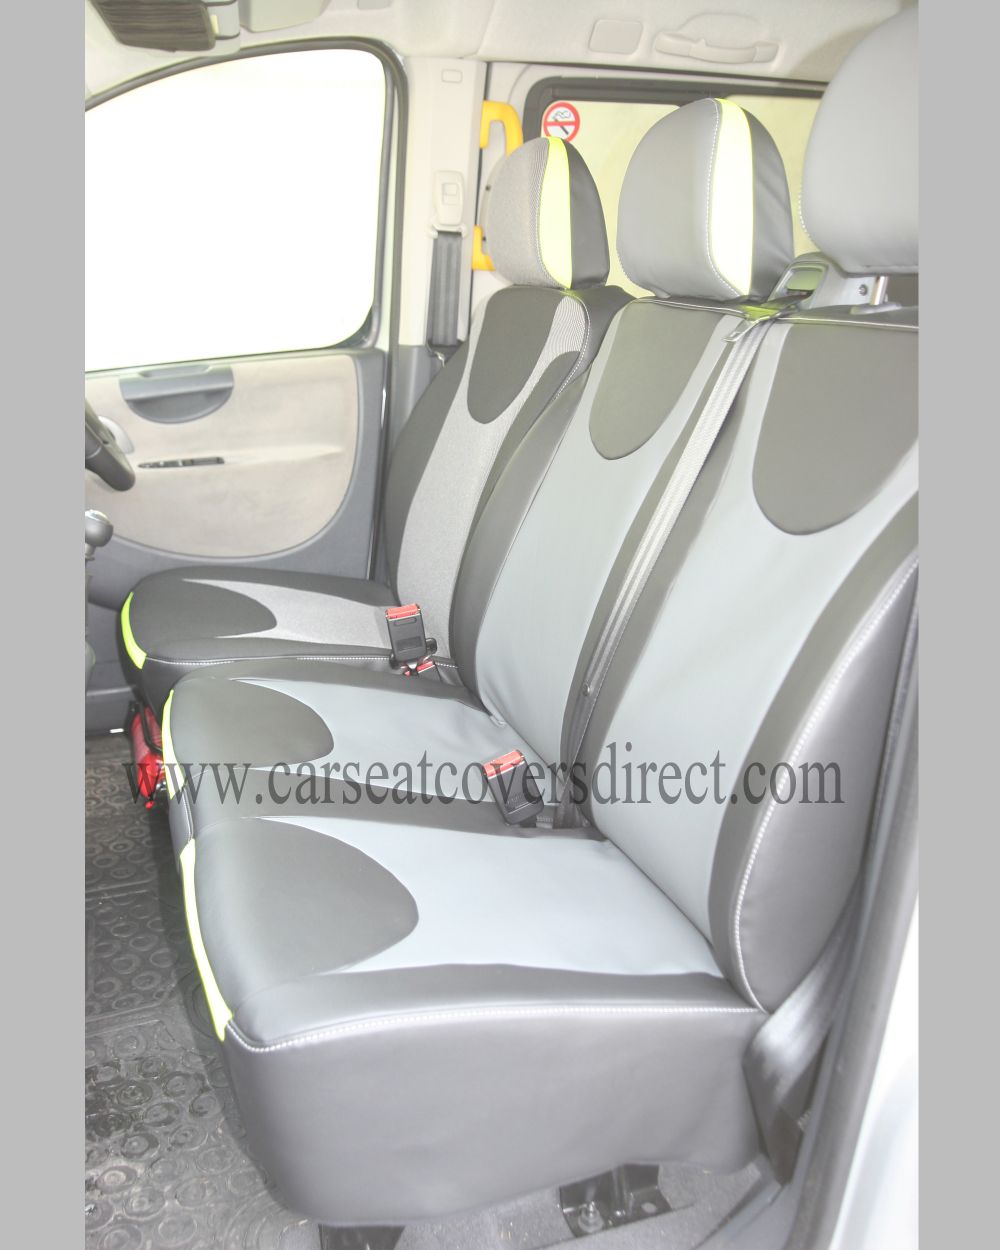  FORD TRANSIT TOURNEO van seat covers 1st GEN 